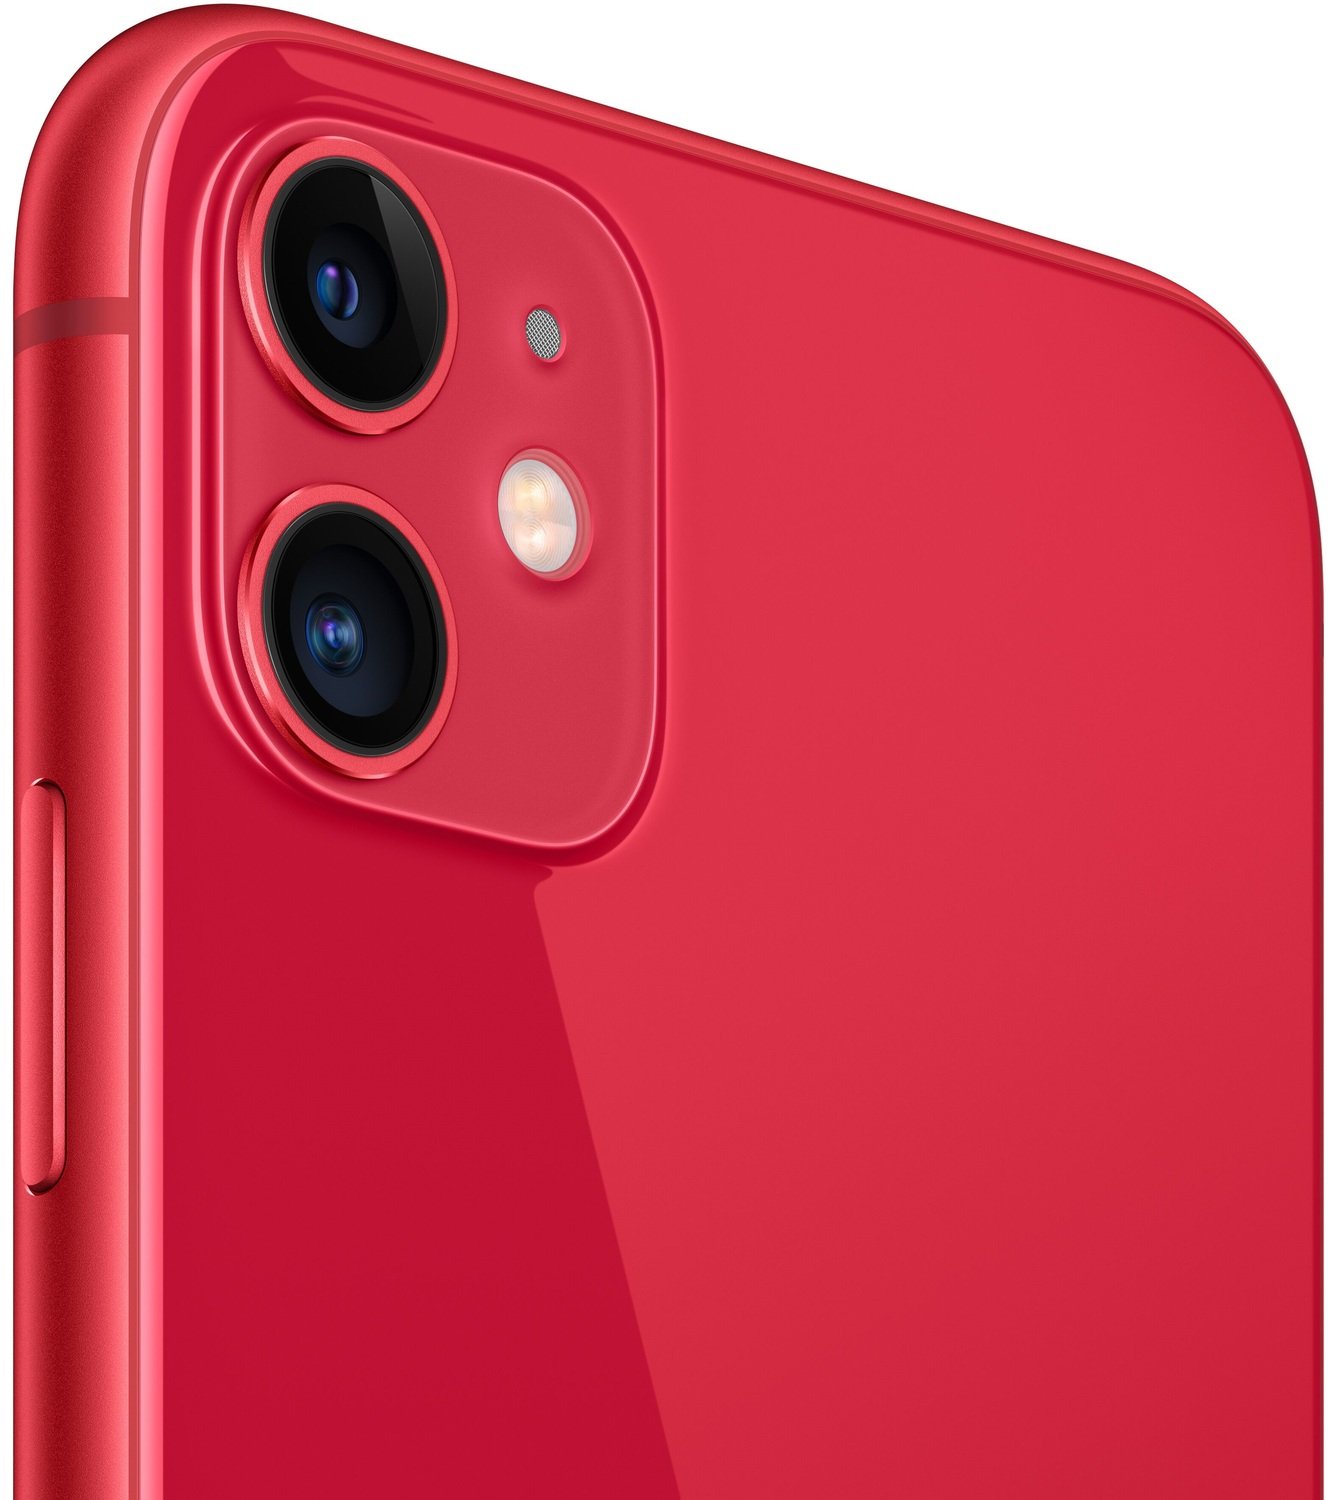 Смартфон Apple iPhone 11 128GB (PRODUCT)RED (slim box) (MHDK3)фото